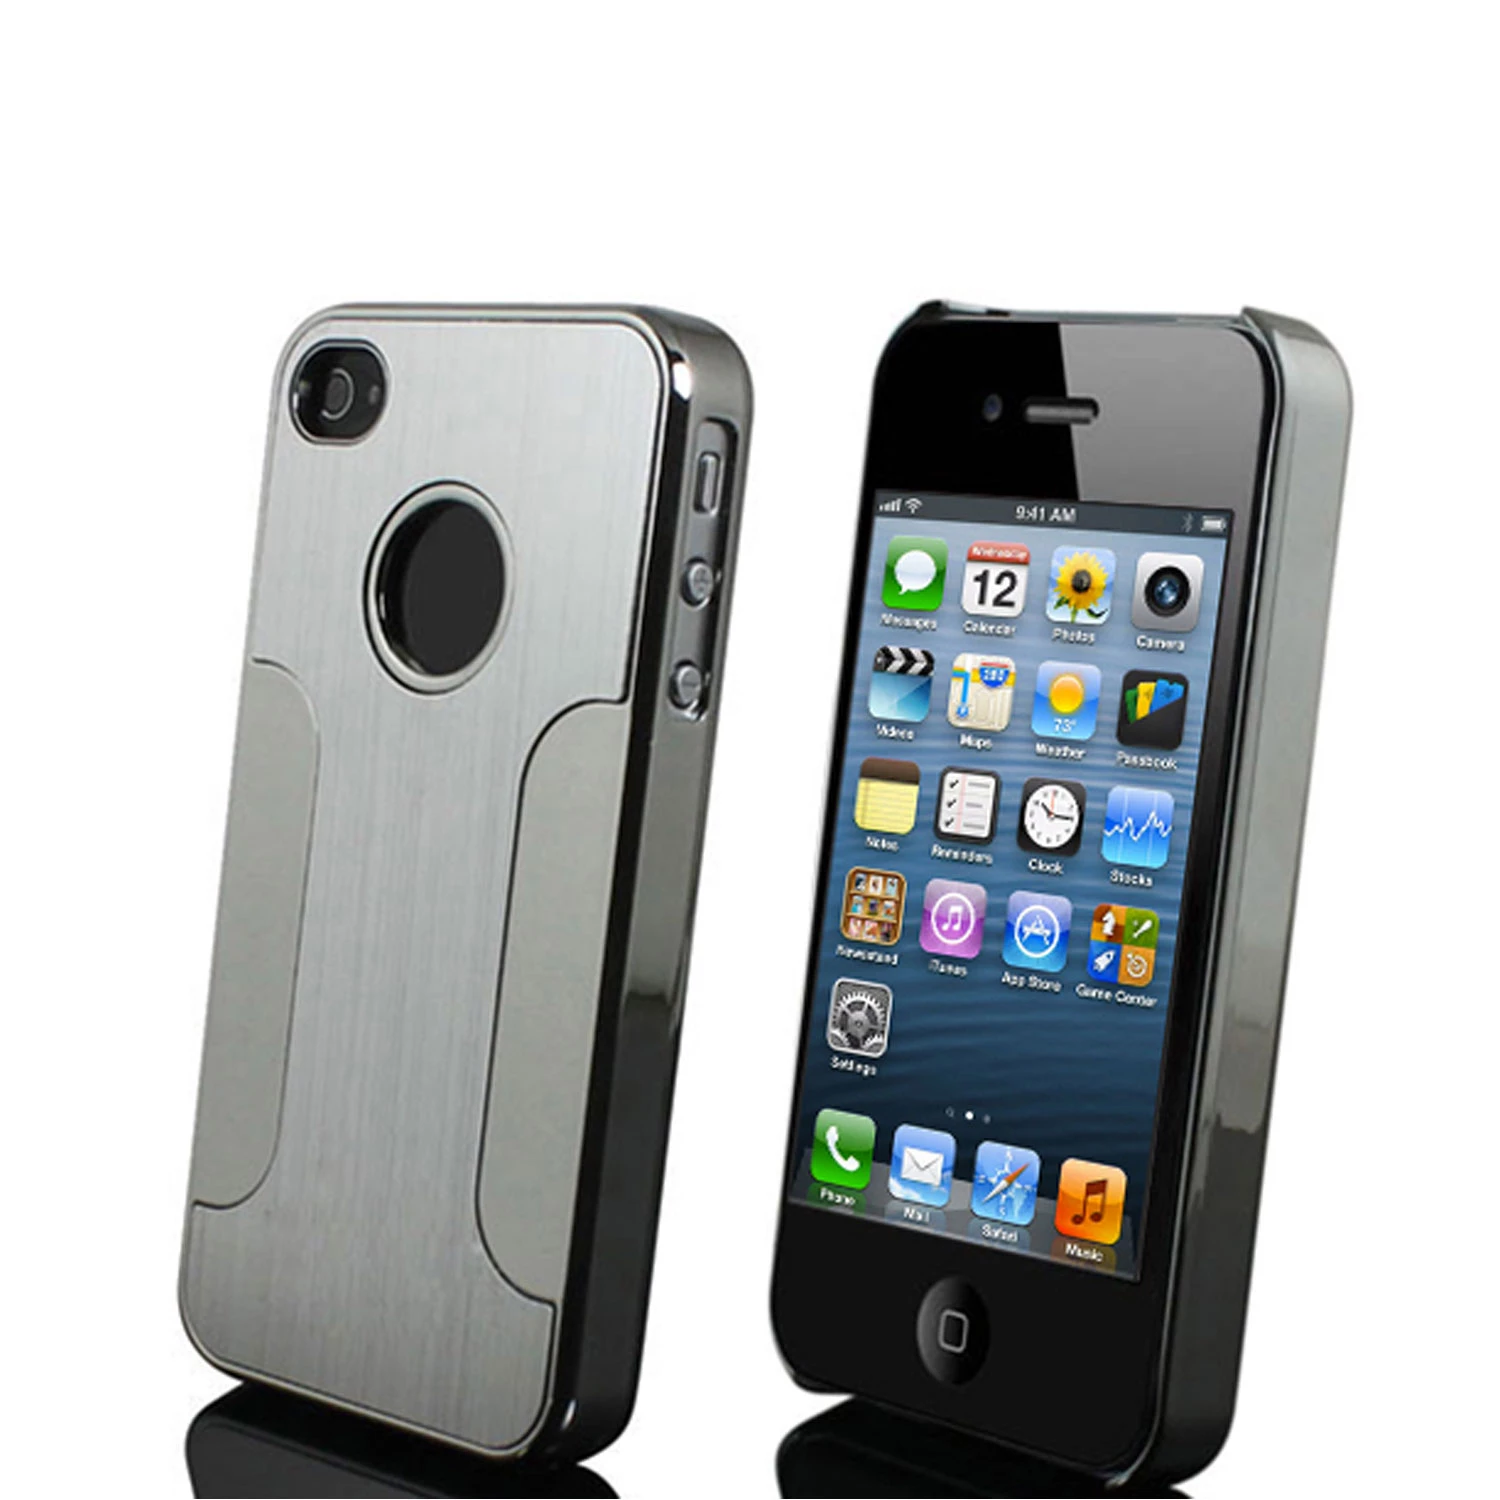 Metal Aluminum Chrome Hard Case for Apple iPhone 5